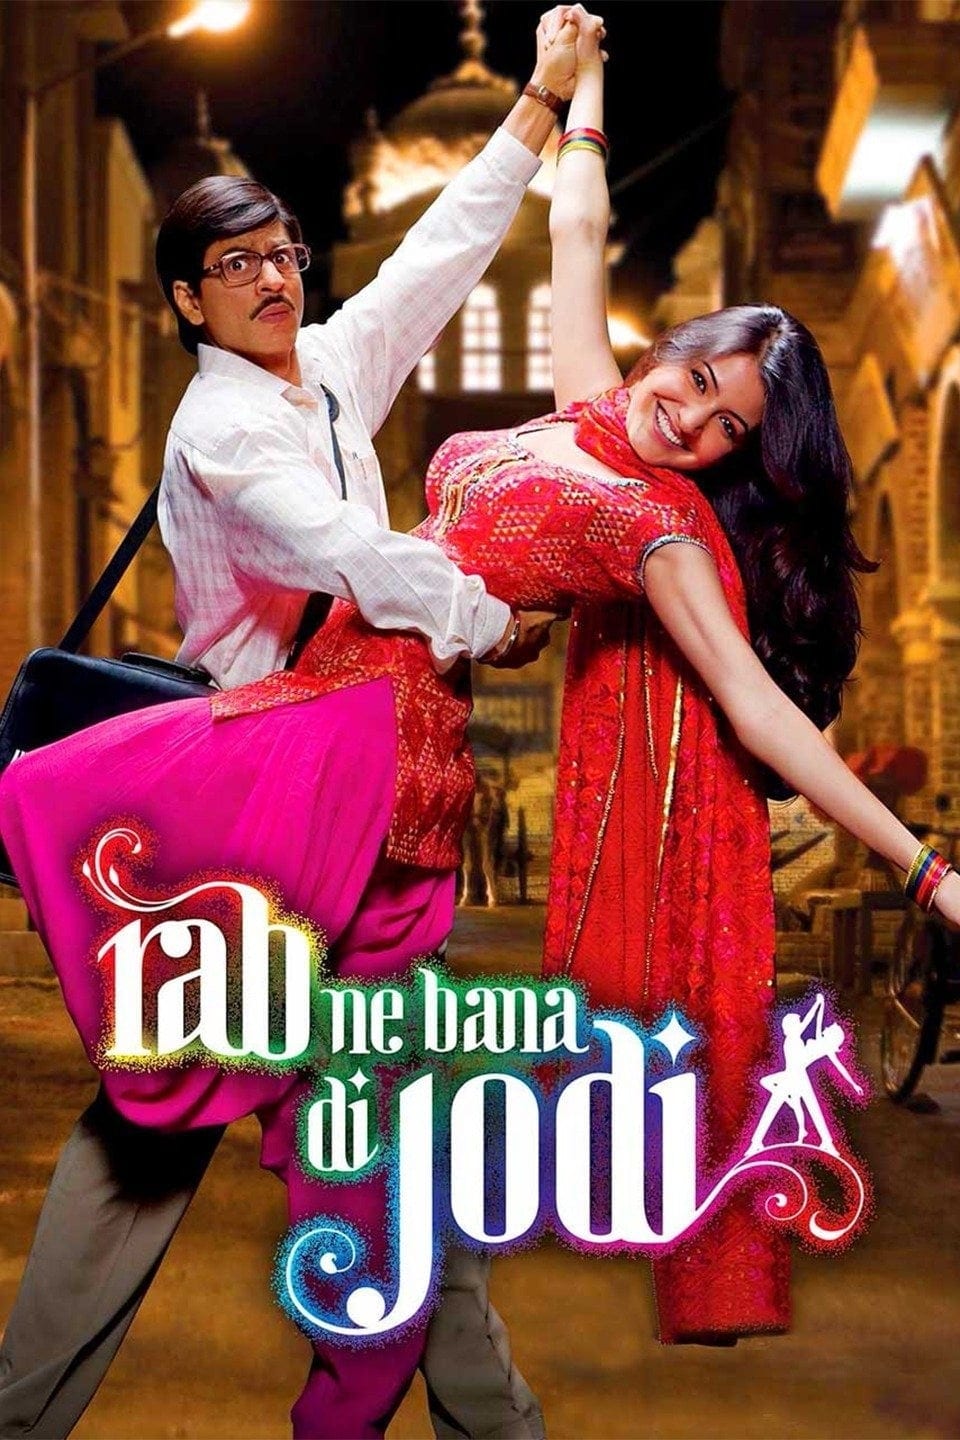 Poster for the movie "Rab Ne Bana Di Jodi"